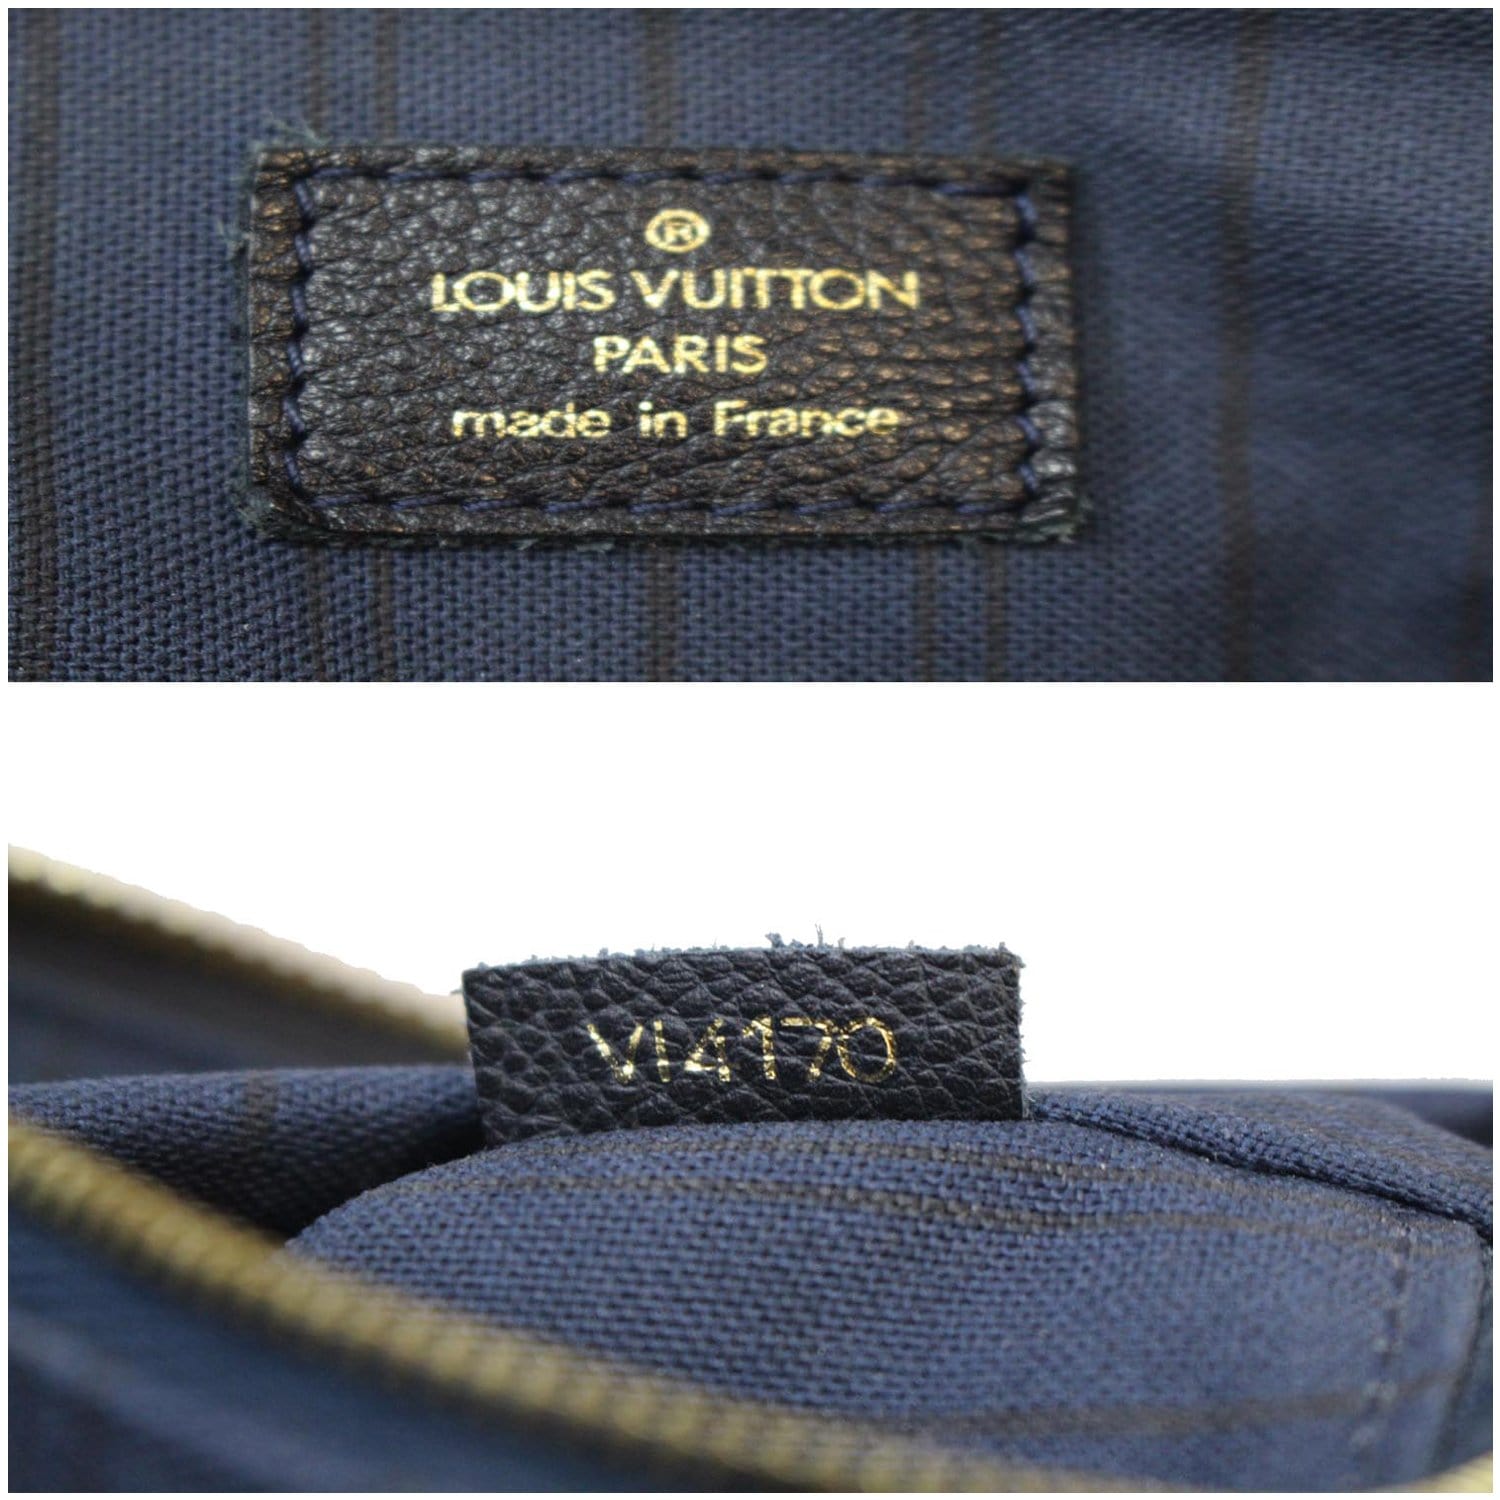 Louis Vuitton Lumineuse PM Monogram Empreinte Raspberry Two-Way Shoulder Bag